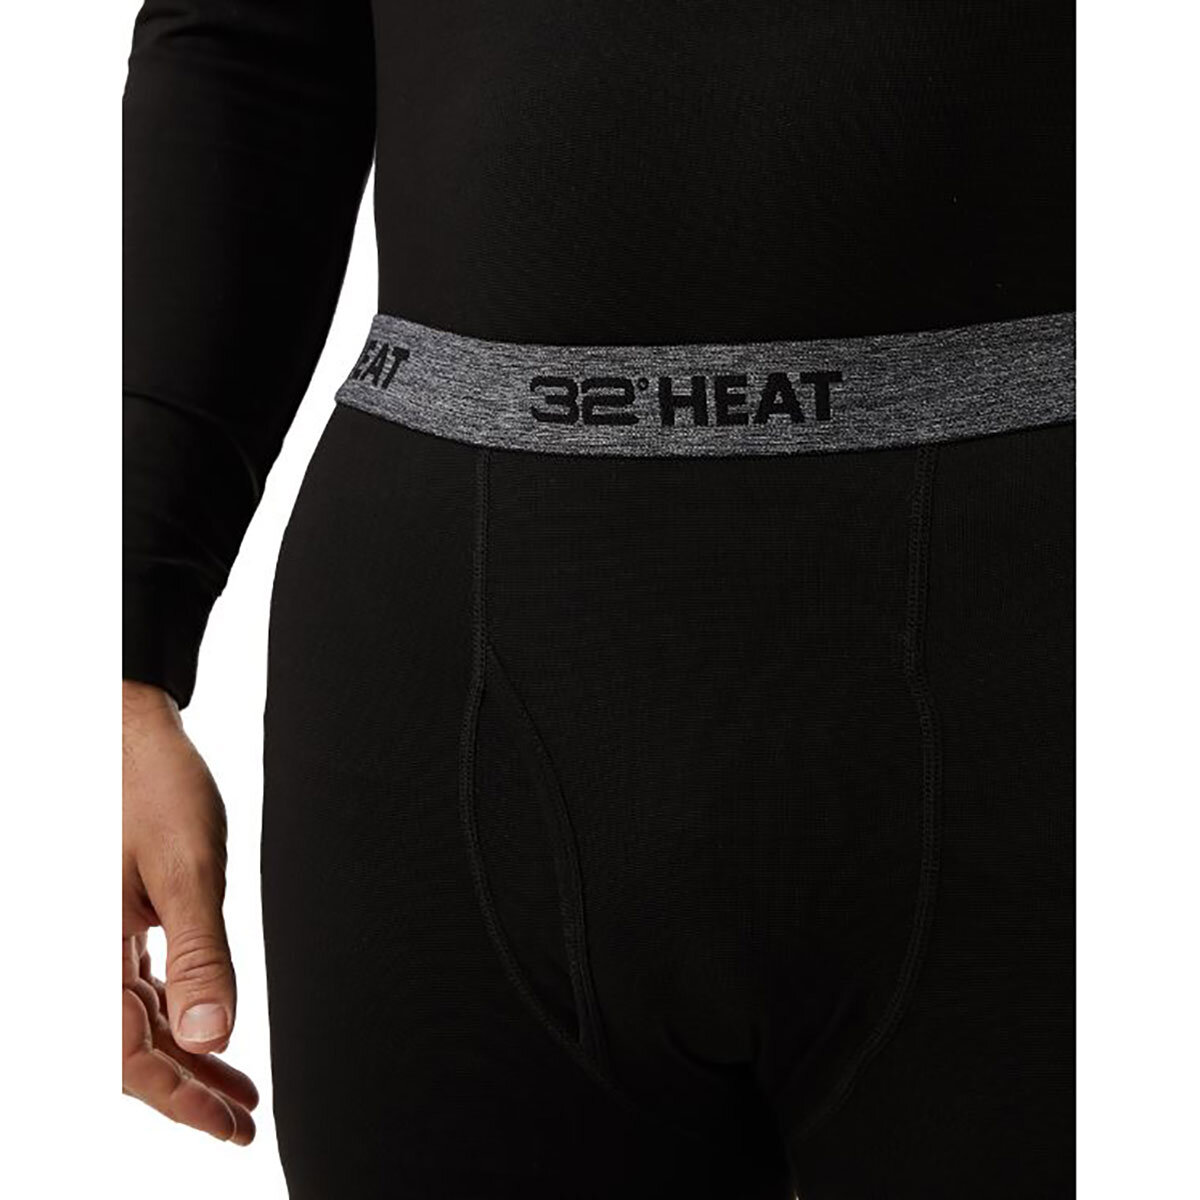 32 Degrees Men's Heat Pant - 2 Pack 